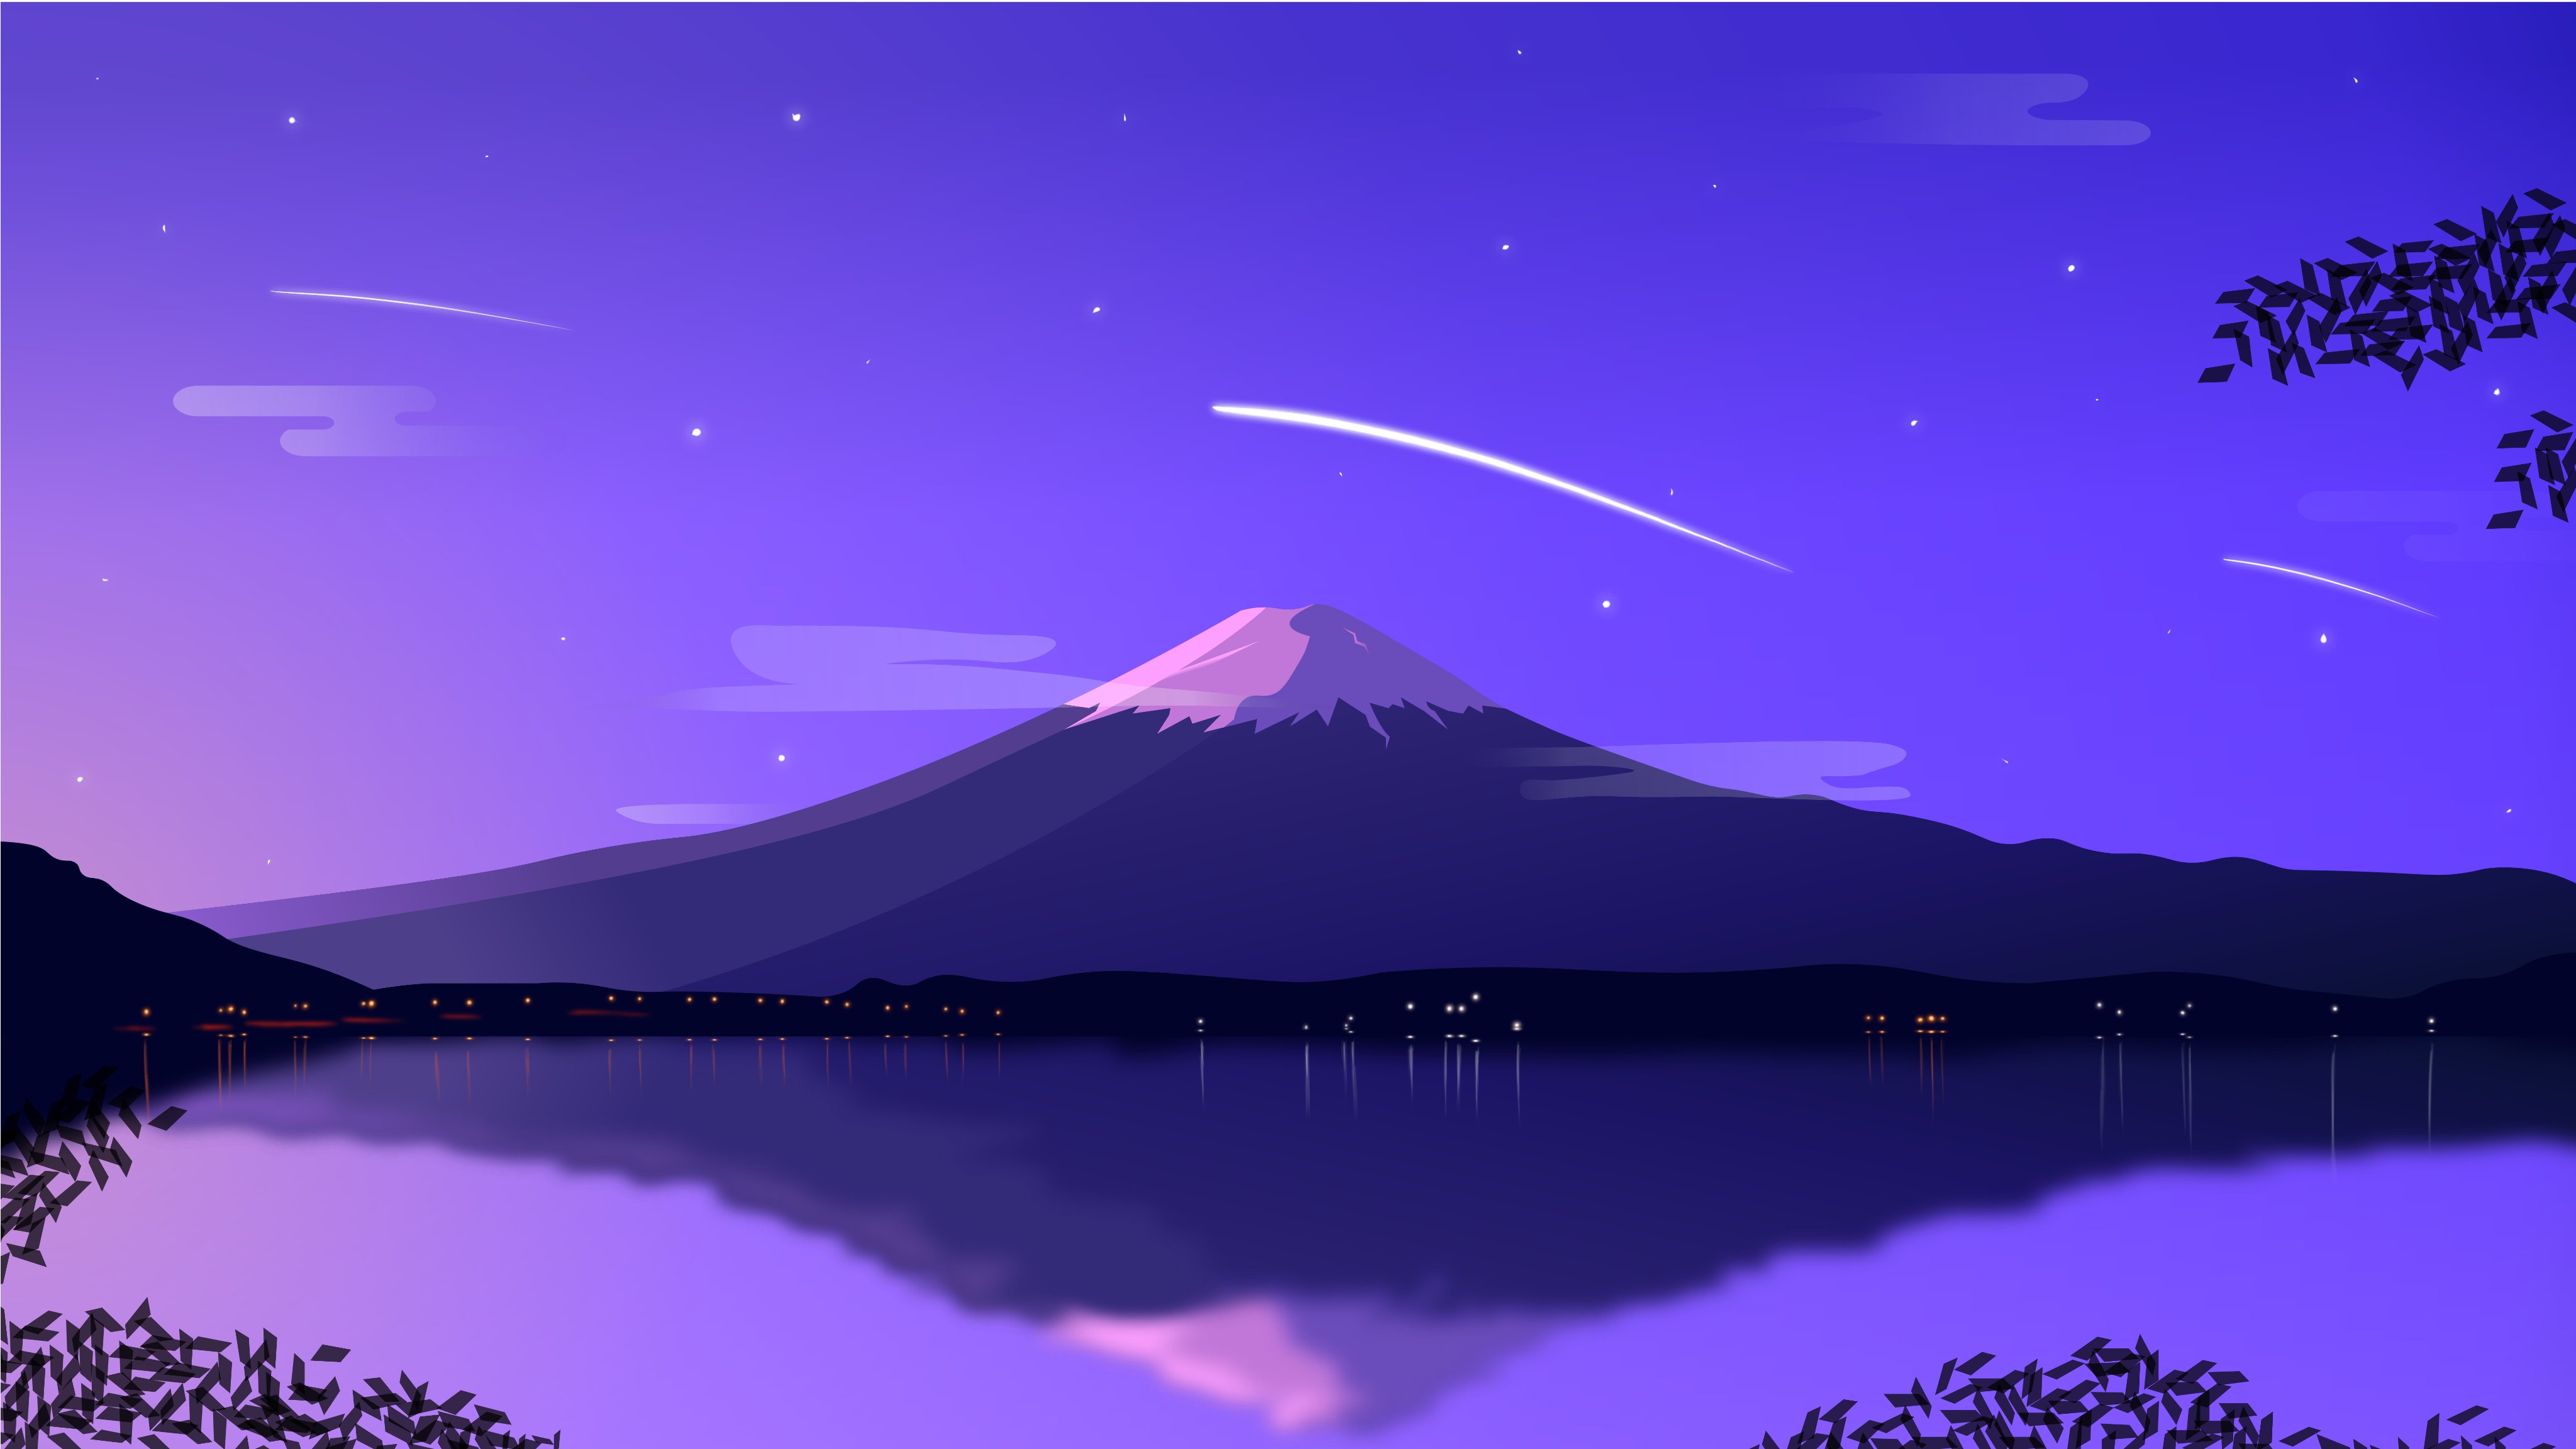 Live wallpaper Mount Fuji at Sunset Ukiyo-e Style [4K] DOWNLOAD FREE  (2849969425)